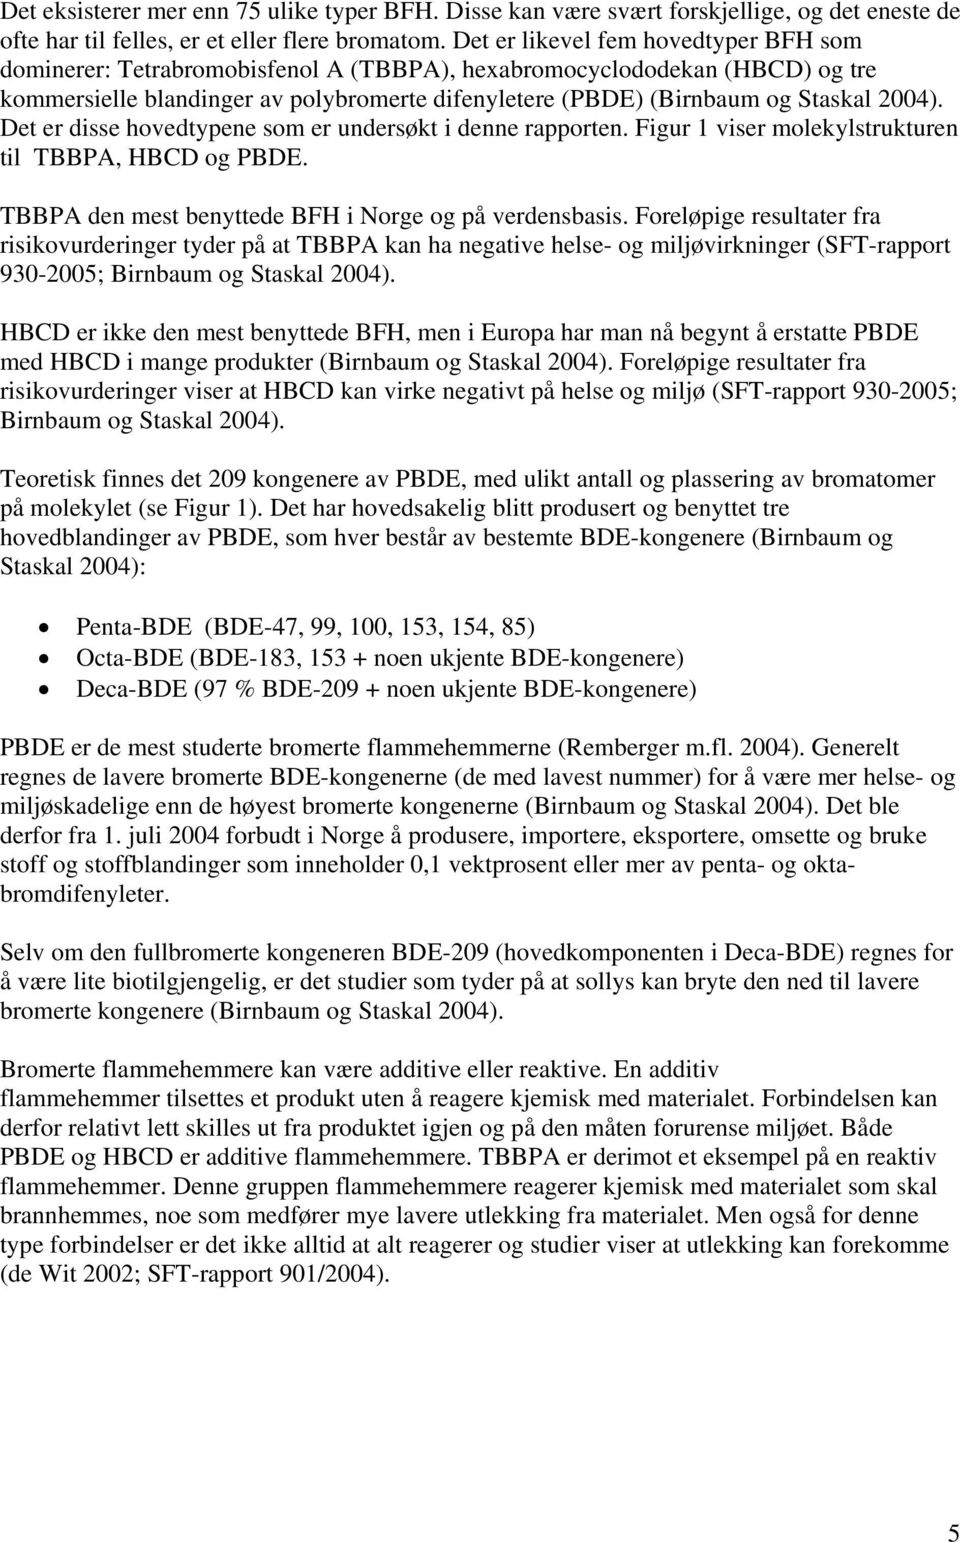 2004). Det er disse hovedtypene som er undersøkt i denne rapporten. Figur 1 viser molekylstrukturen til TBBPA, HBCD og PBDE. TBBPA den mest benyttede BFH i Norge og på verdensbasis.